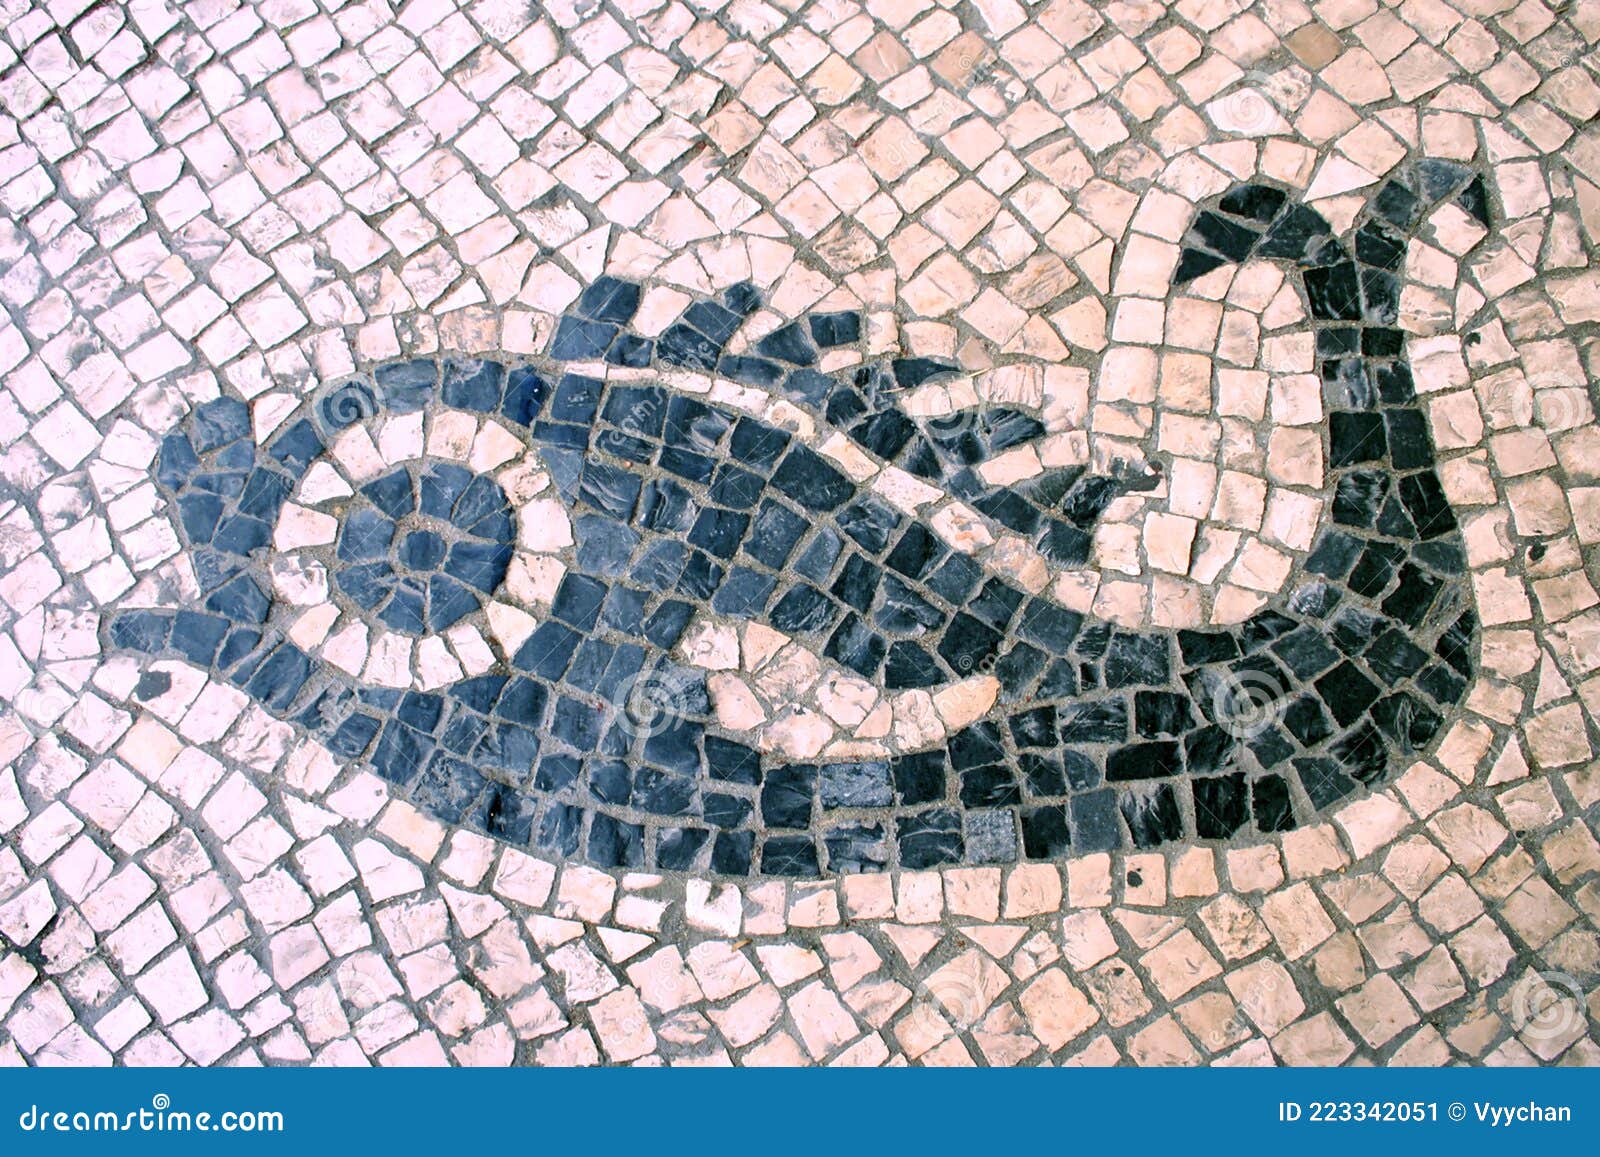 portuguese macau mosaic arts craftsmanship marine life fish macao mosaico cobblestone street cultural heritage architecture